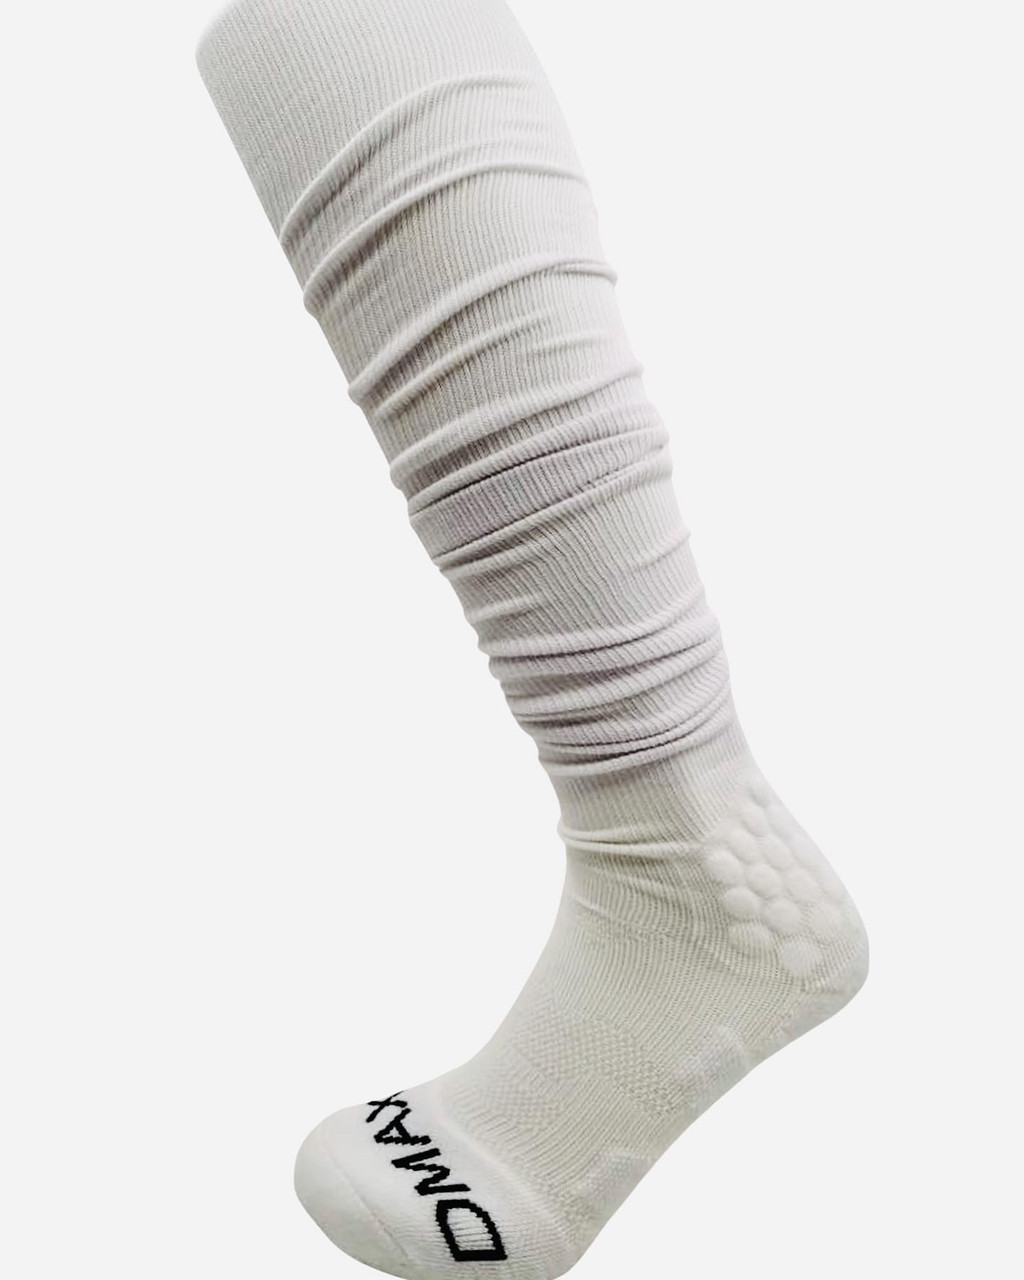 WHITE - OBJ Padded - EXTRA Long Scrunchie  Socks - See Product Video